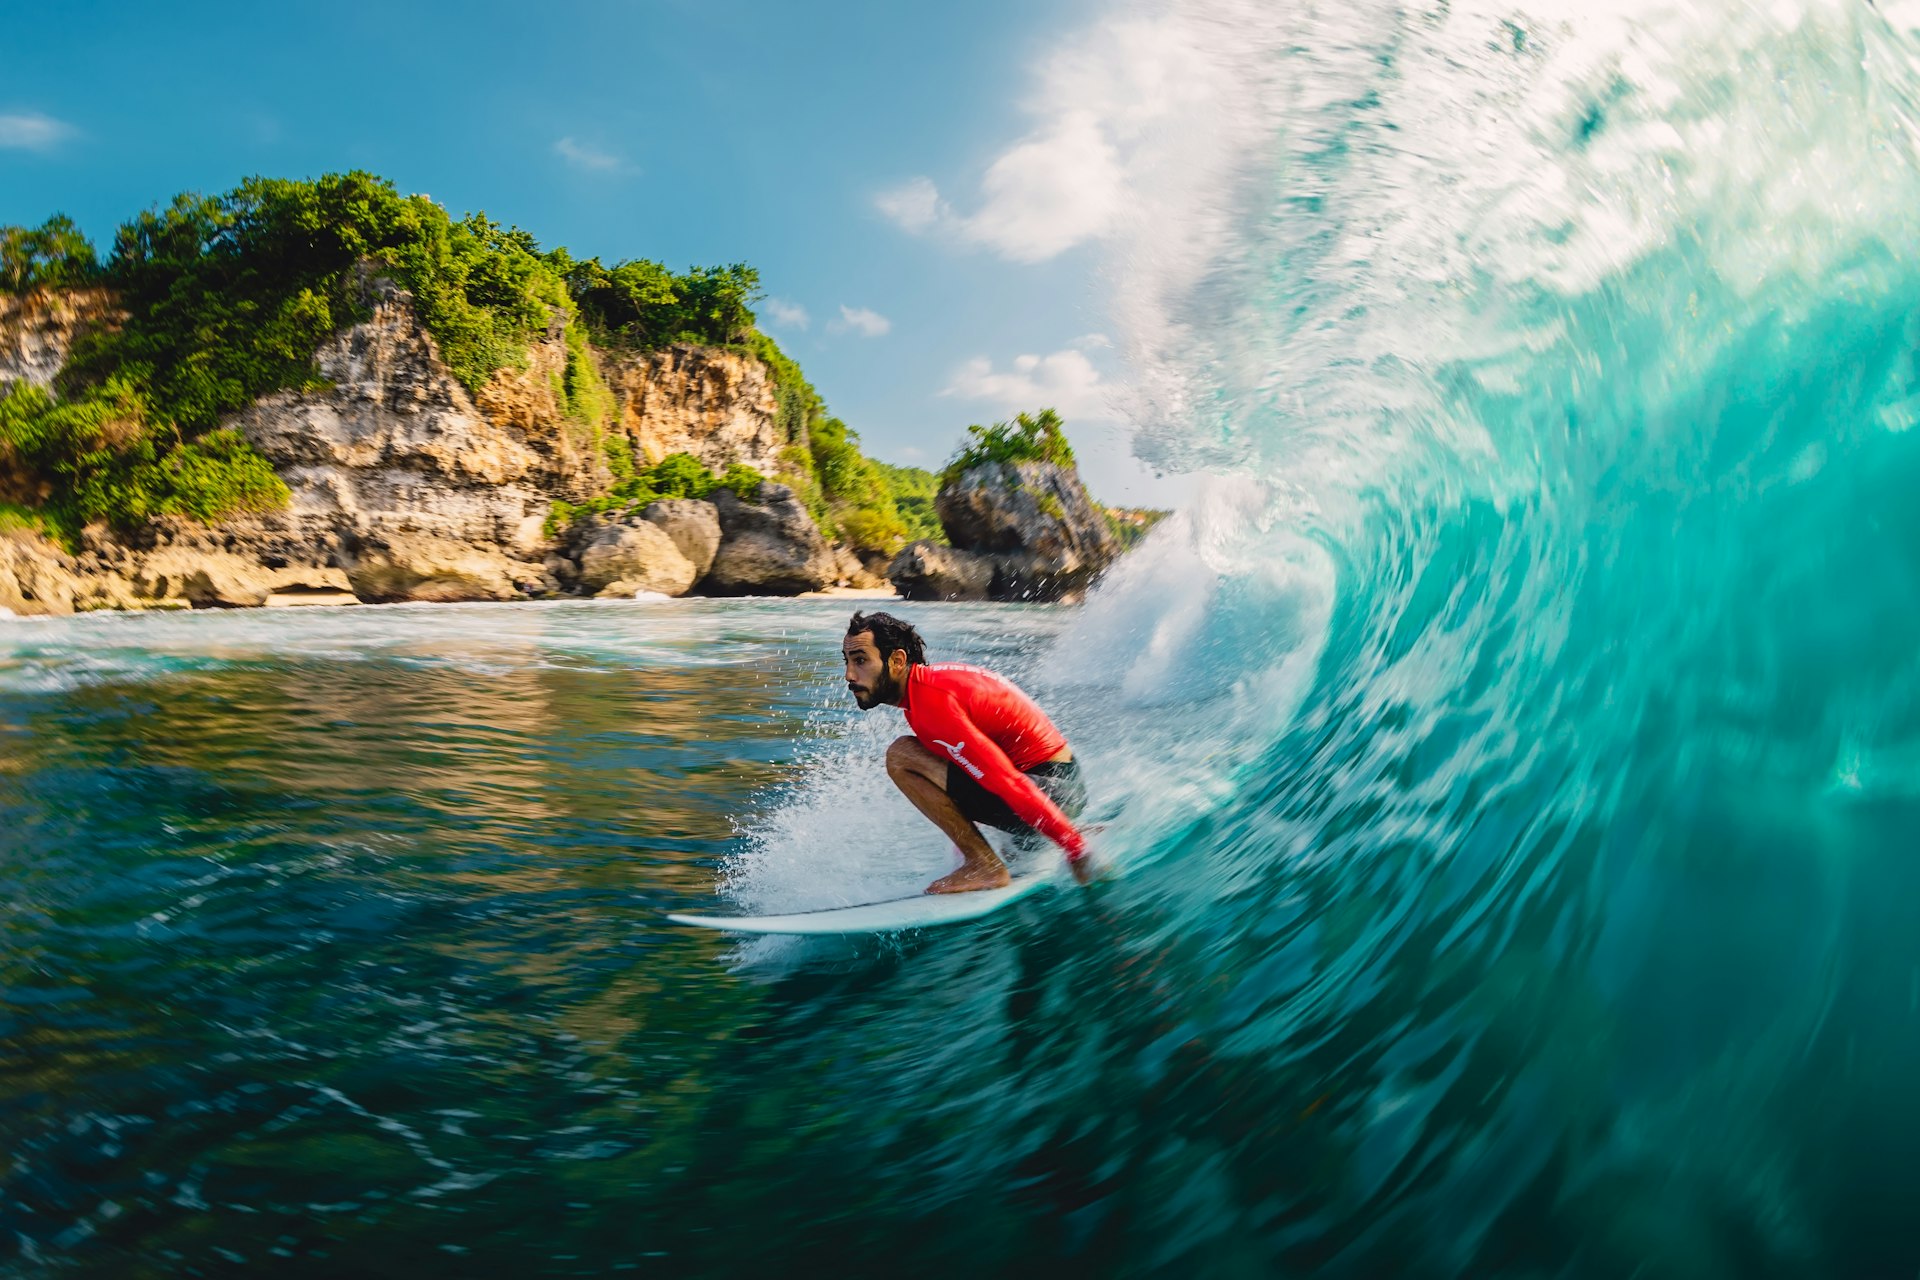 A surfer riding inside a barrel wave, Bali